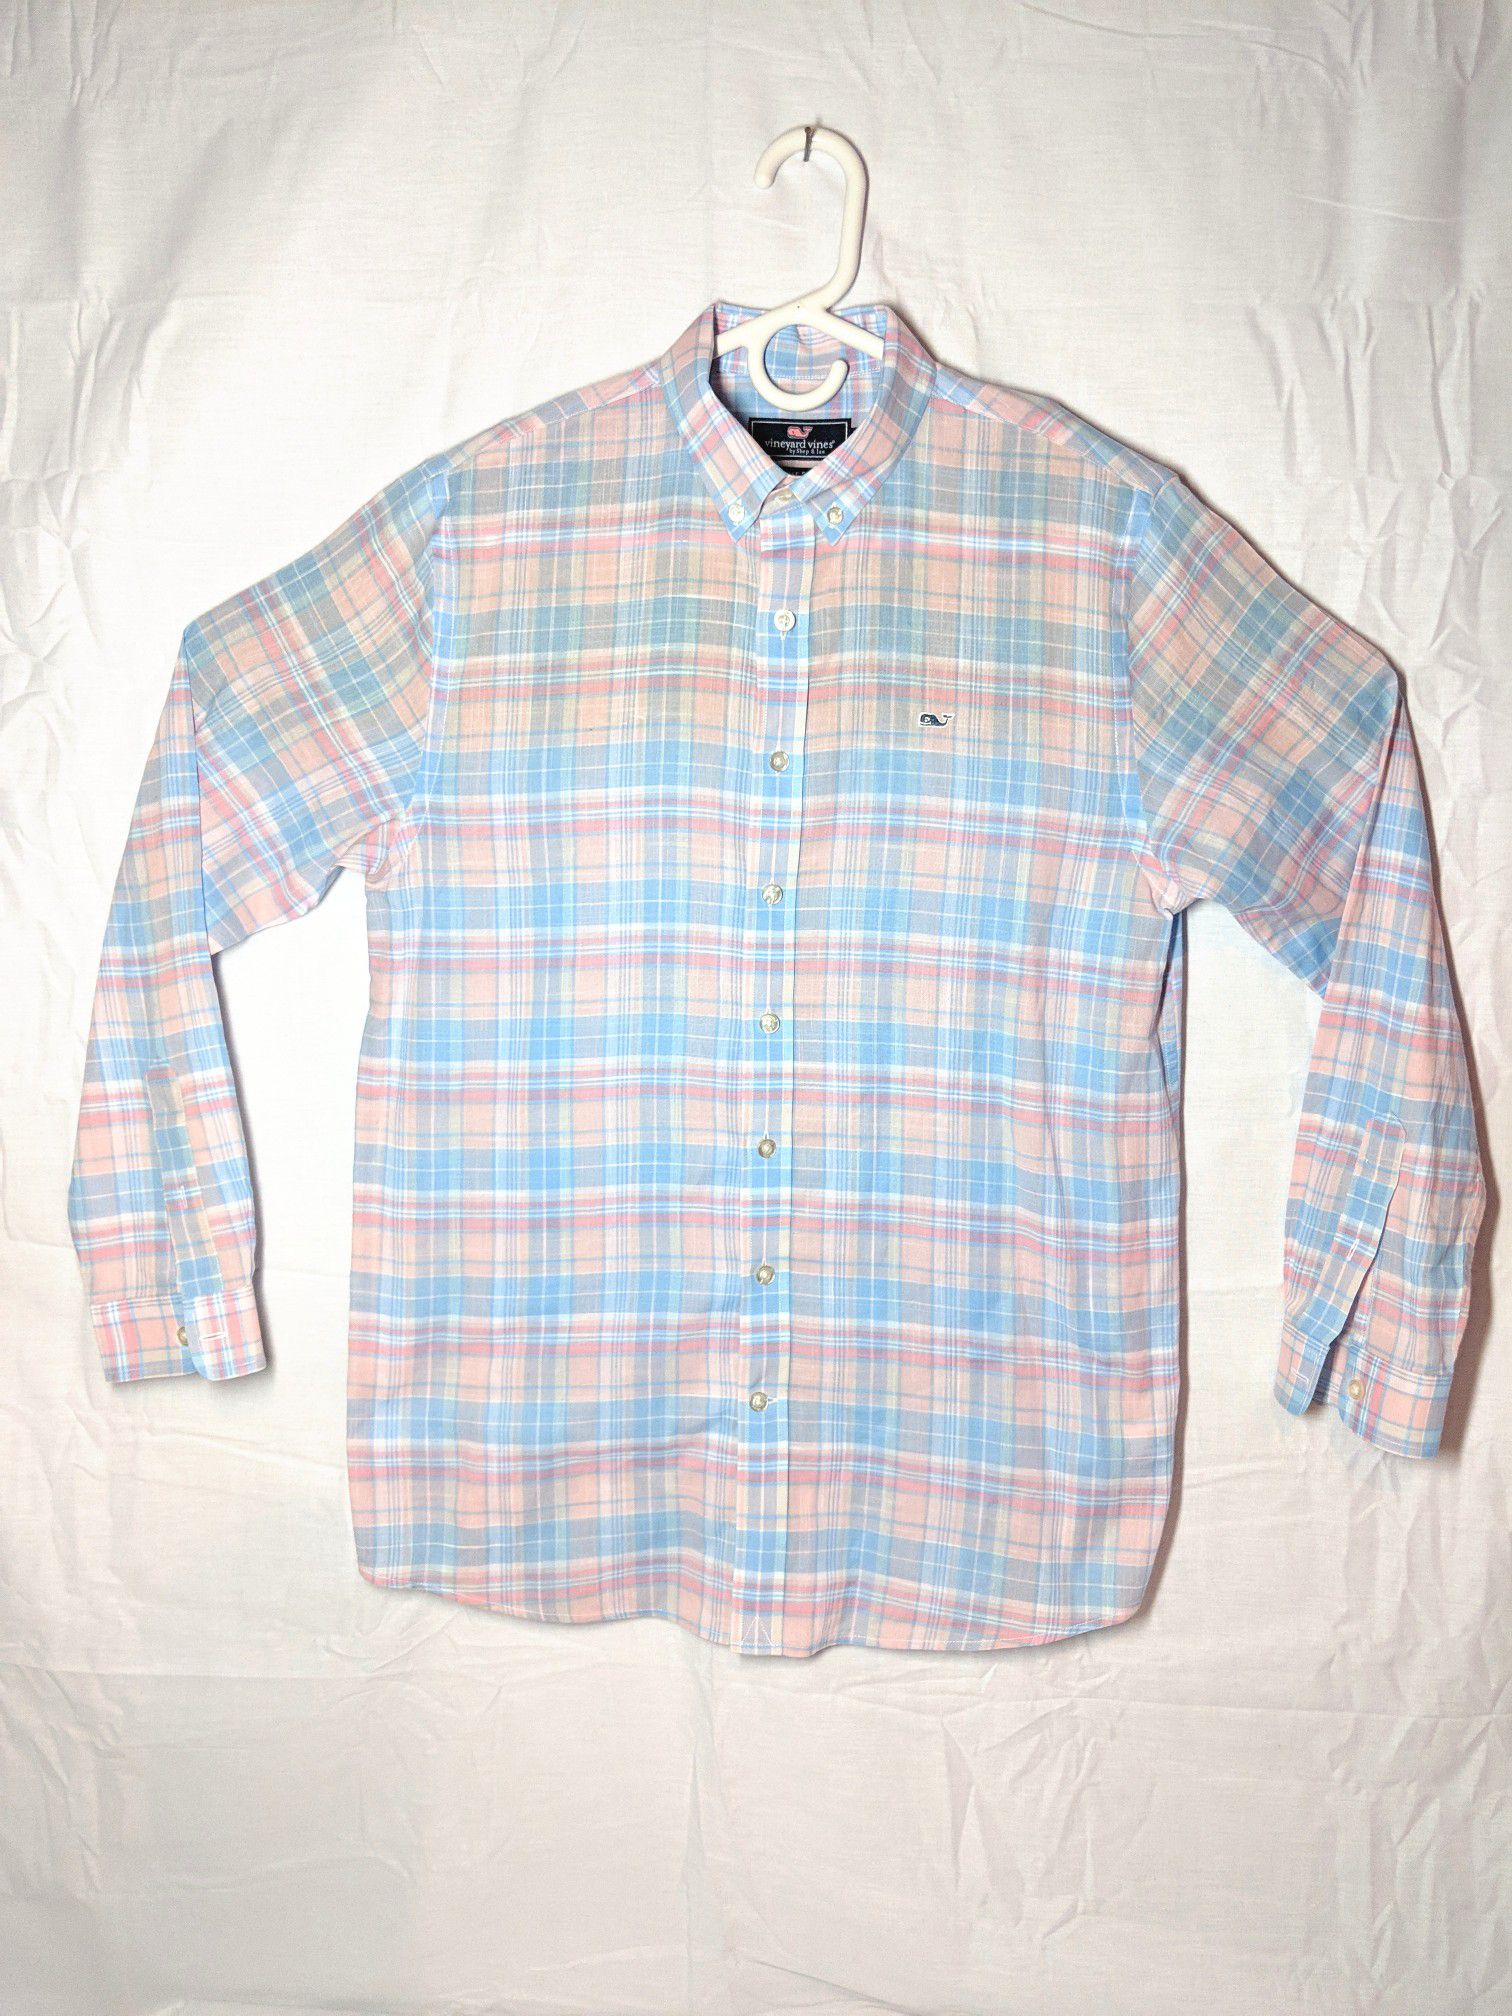 Boys Vineyard Vines Button Front Plaid Shirt sz XL 18